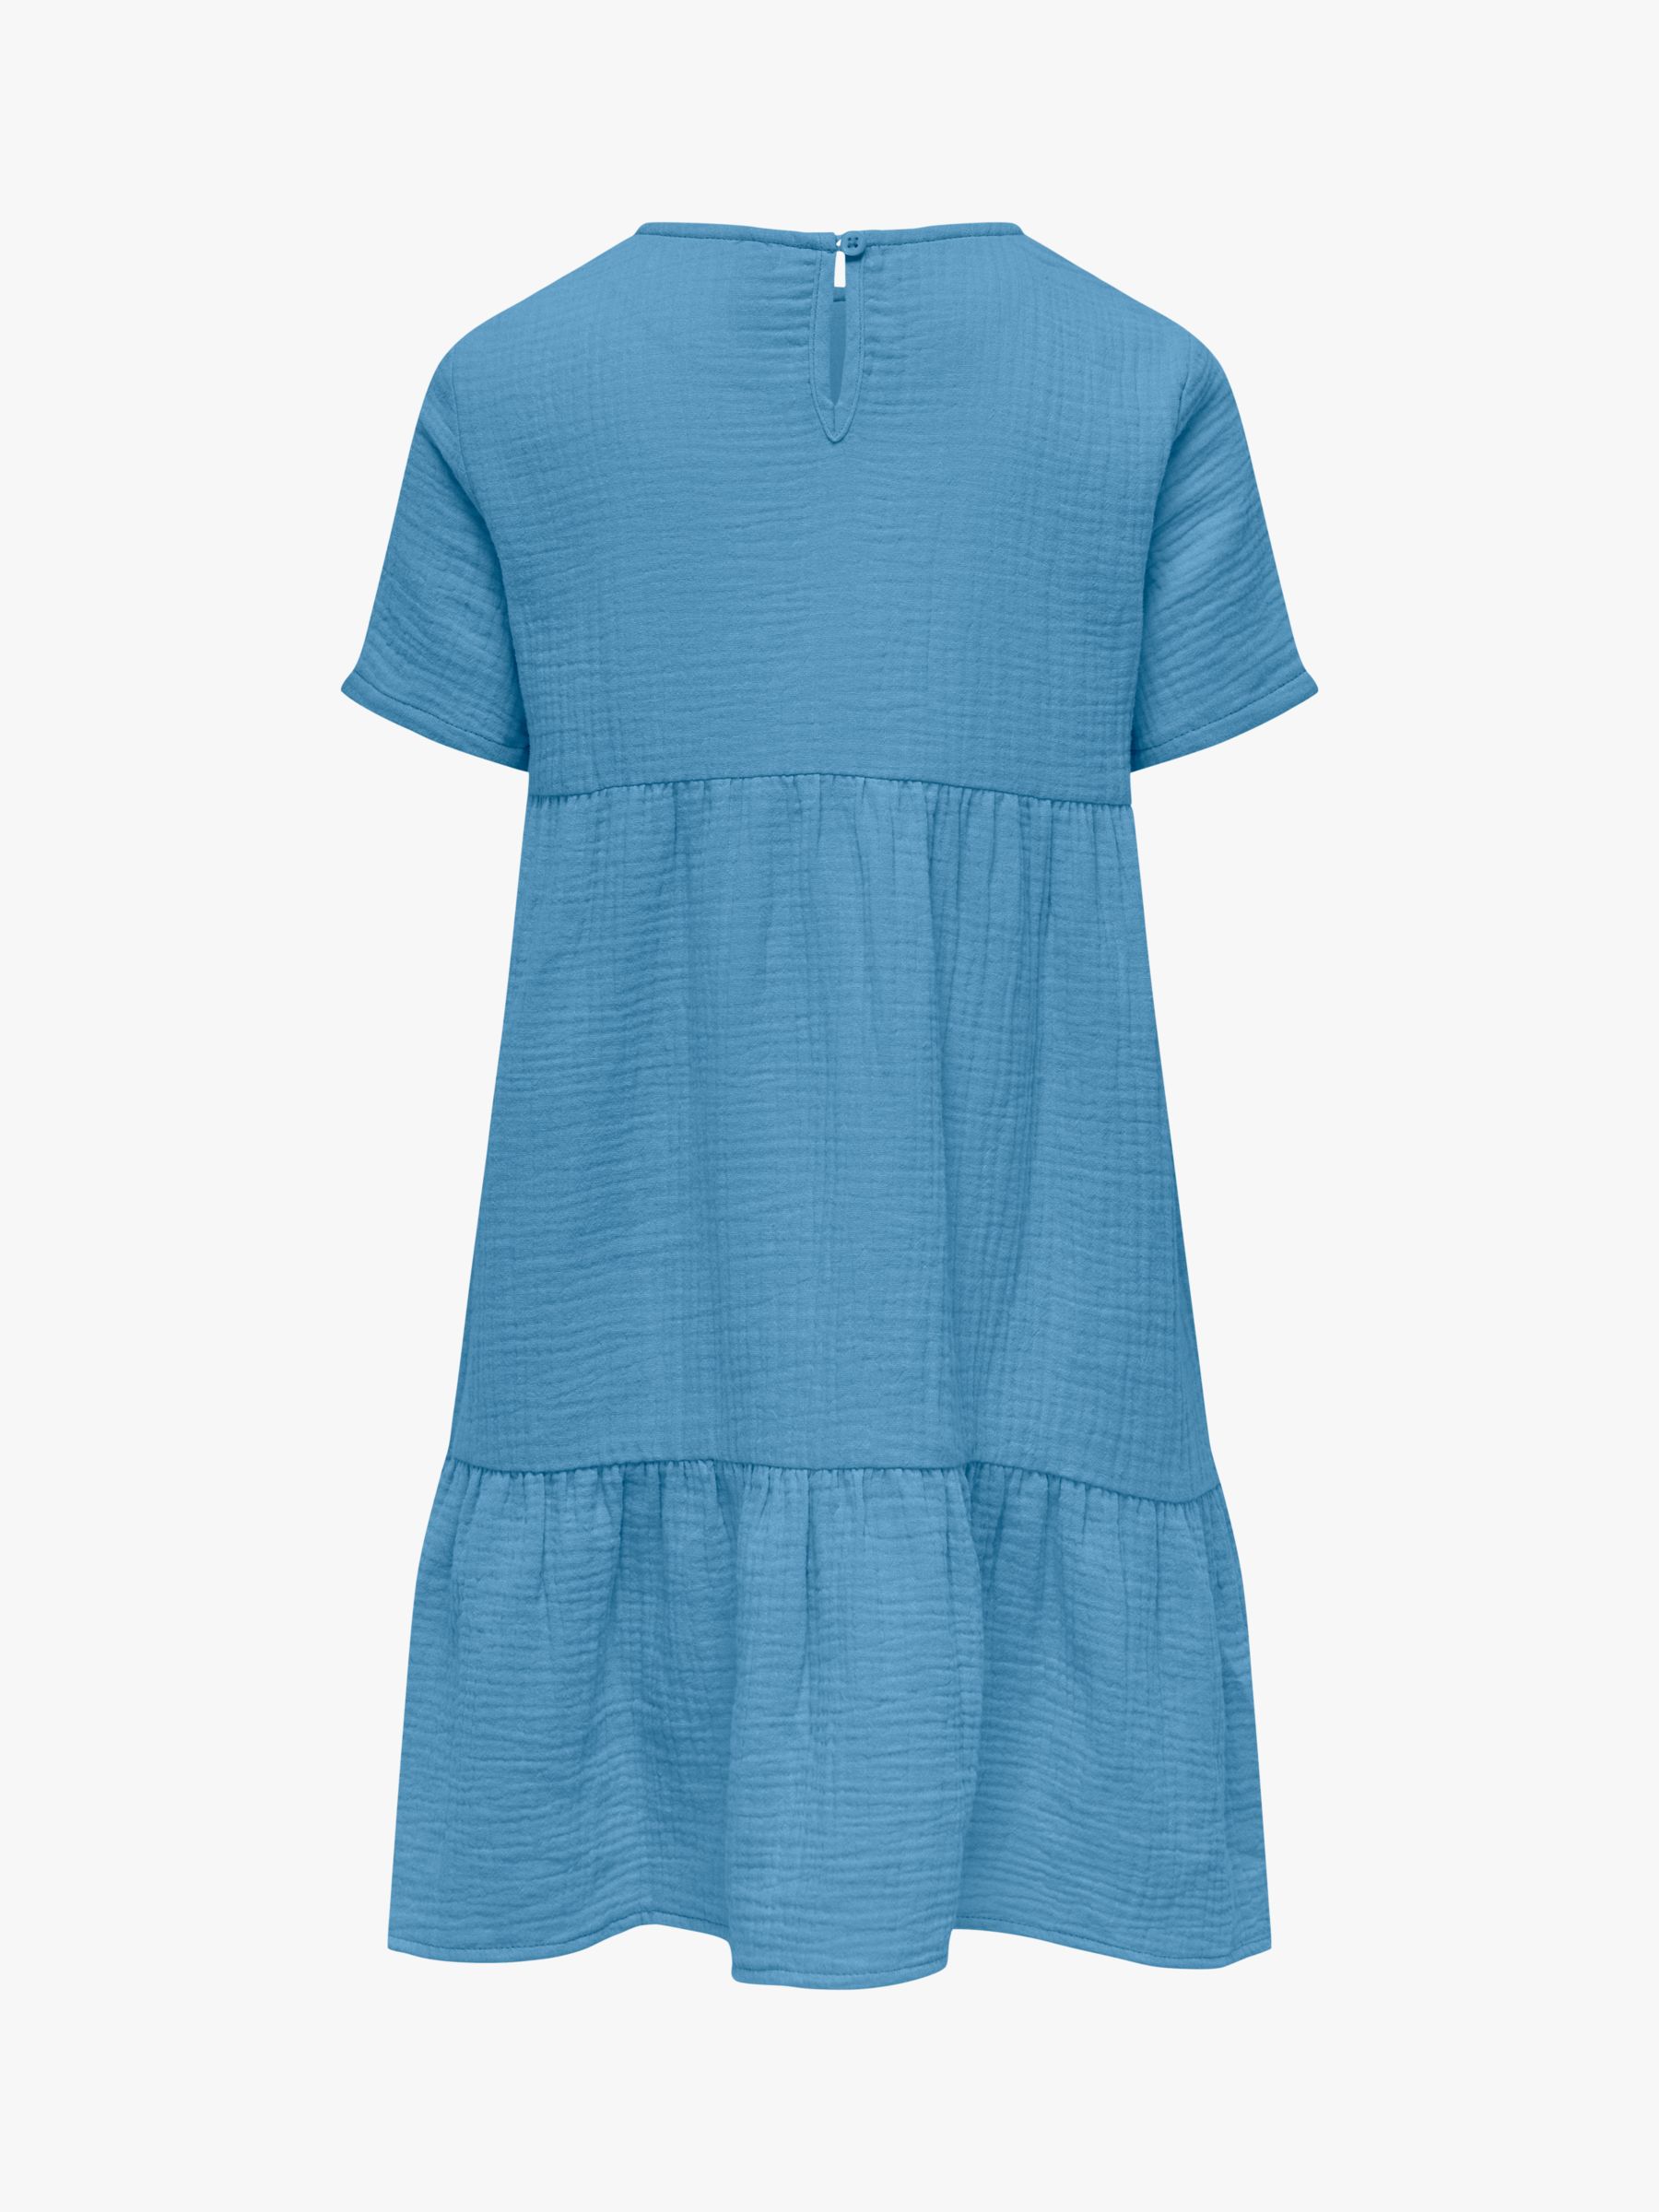 Buy KIDS ONLY Kids' Cotton Layered Short Sleeve Dress, Blissful Blue Online at johnlewis.com